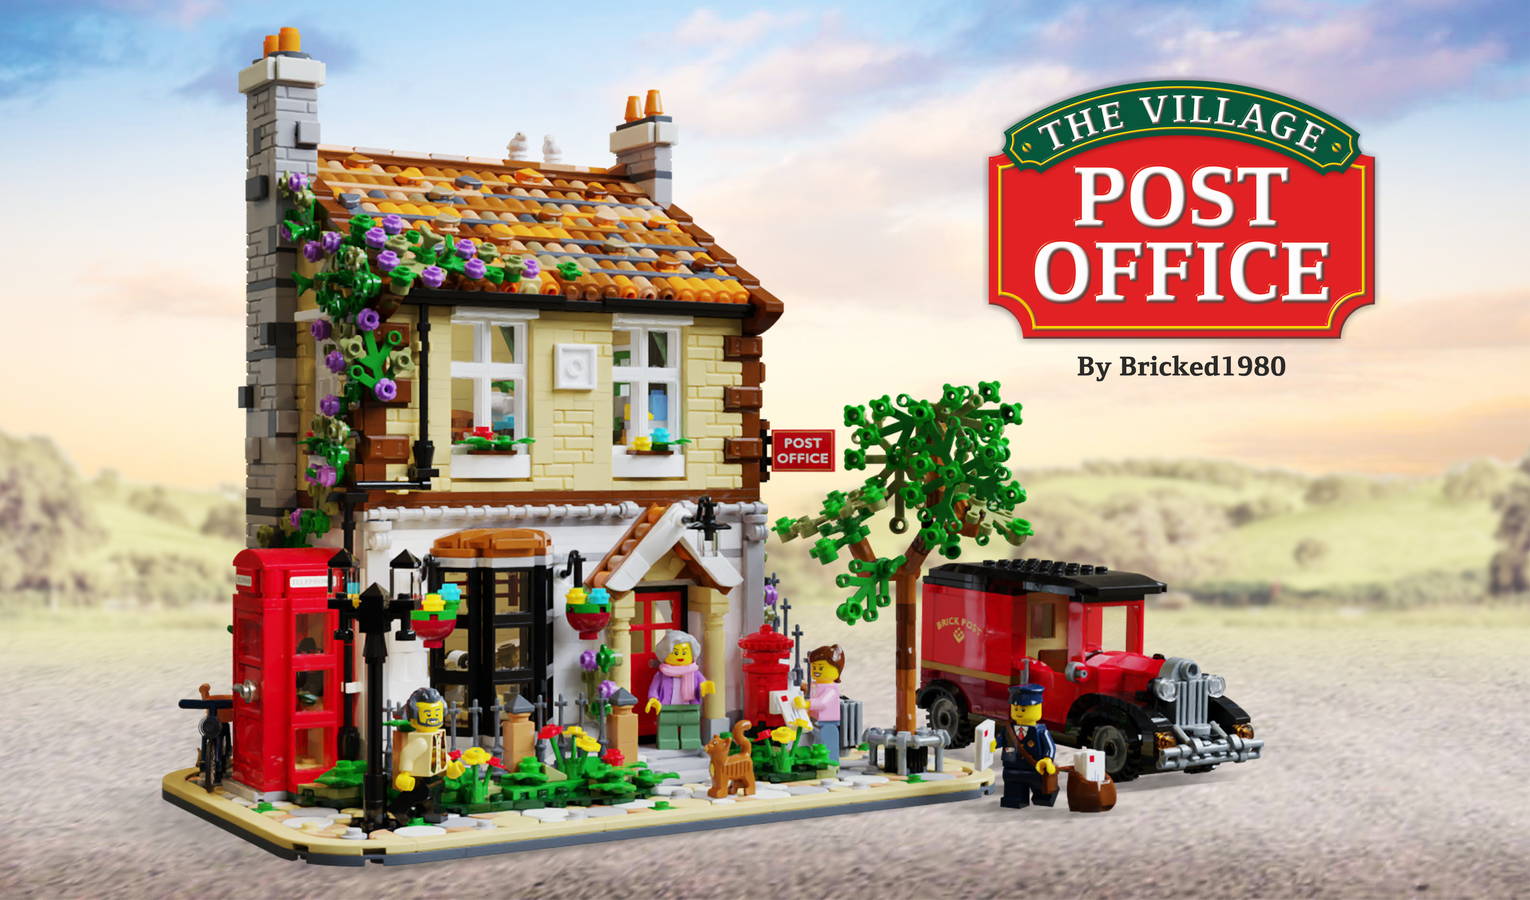 The village post office